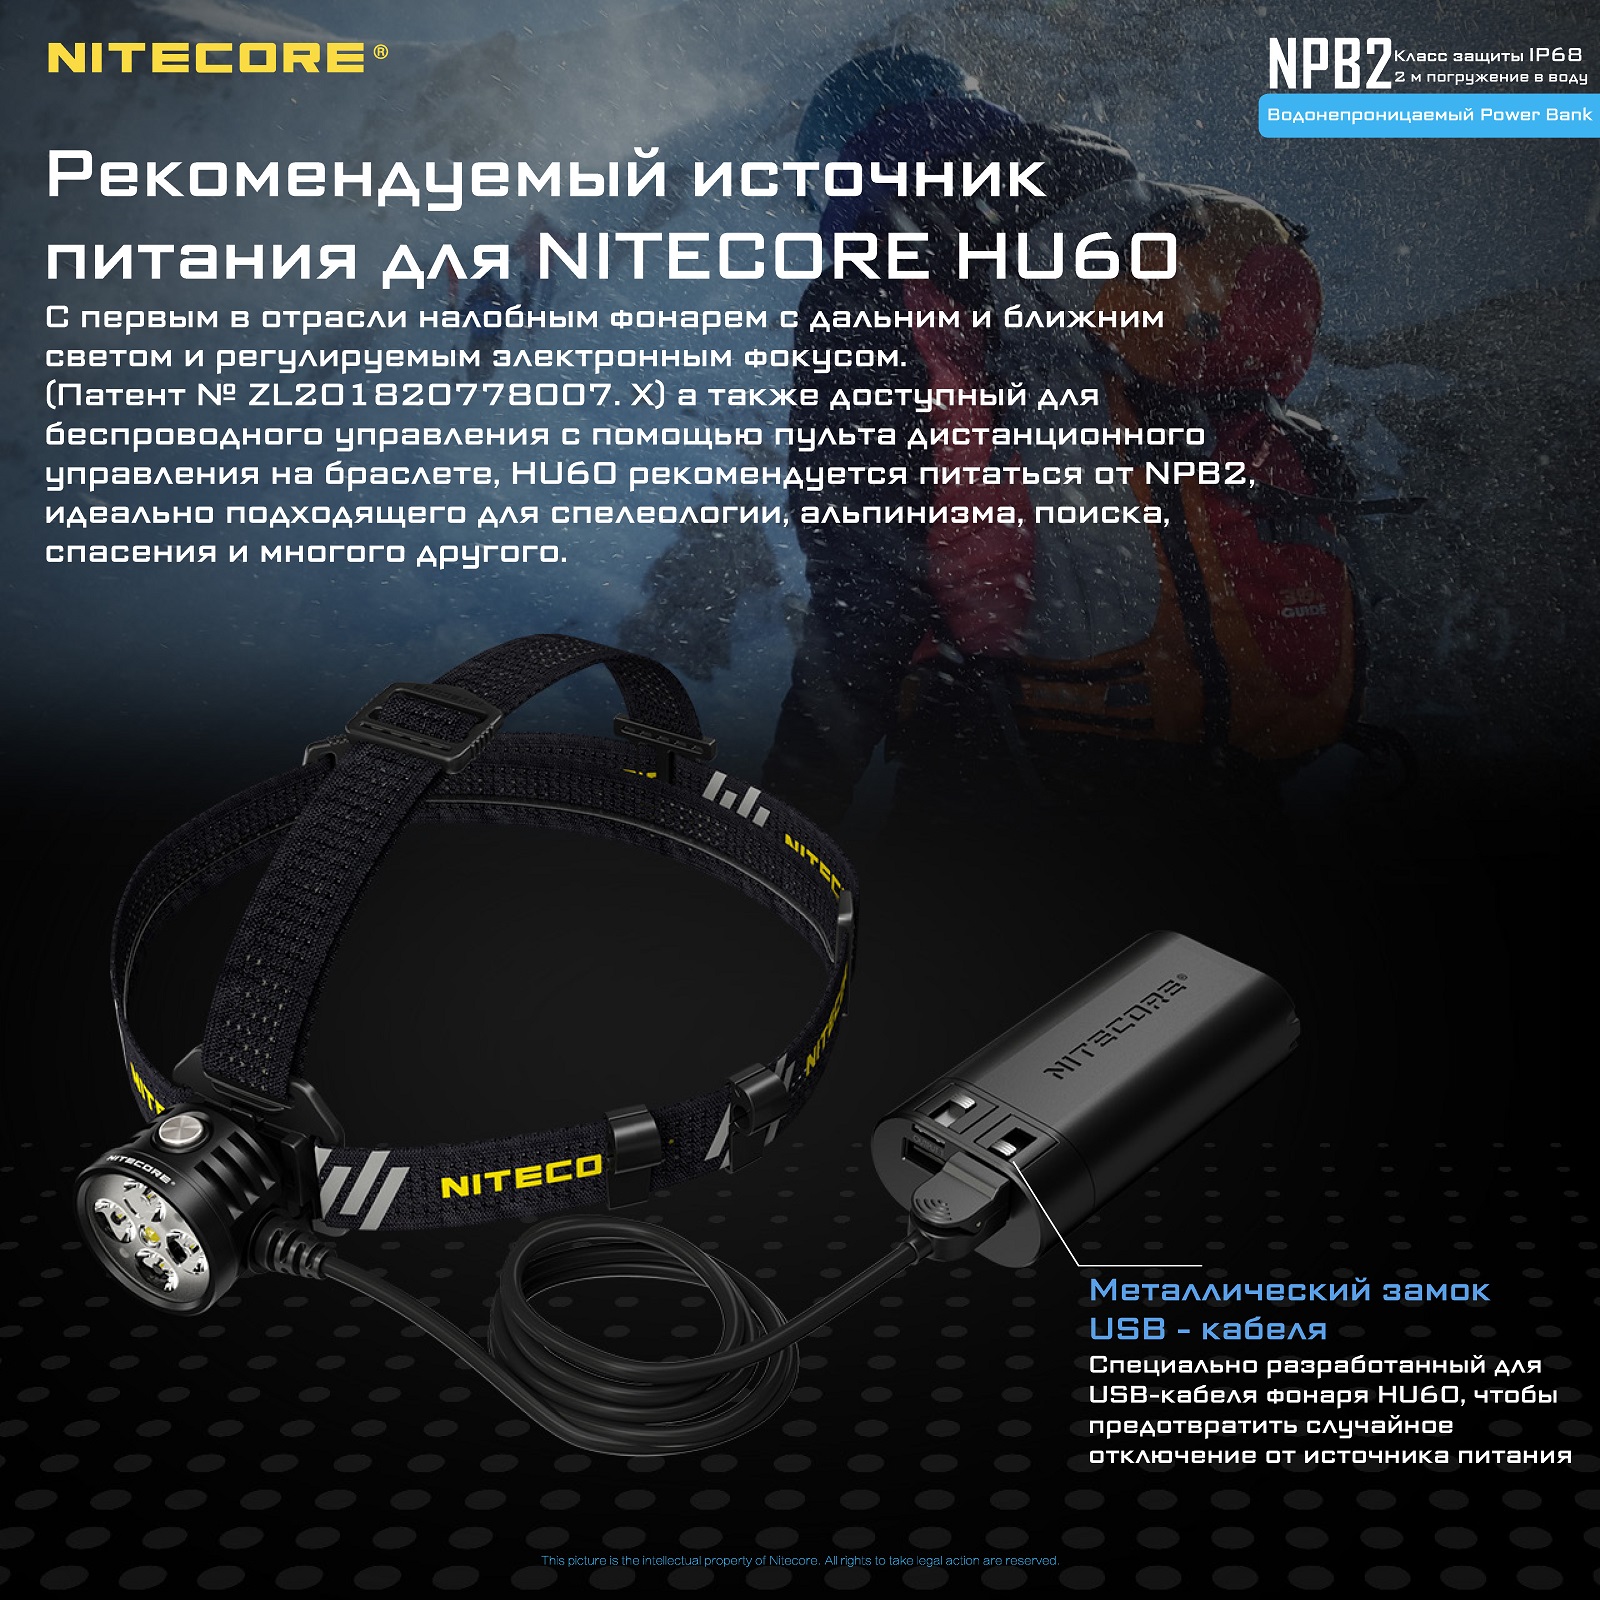 Nit-NPB2-12